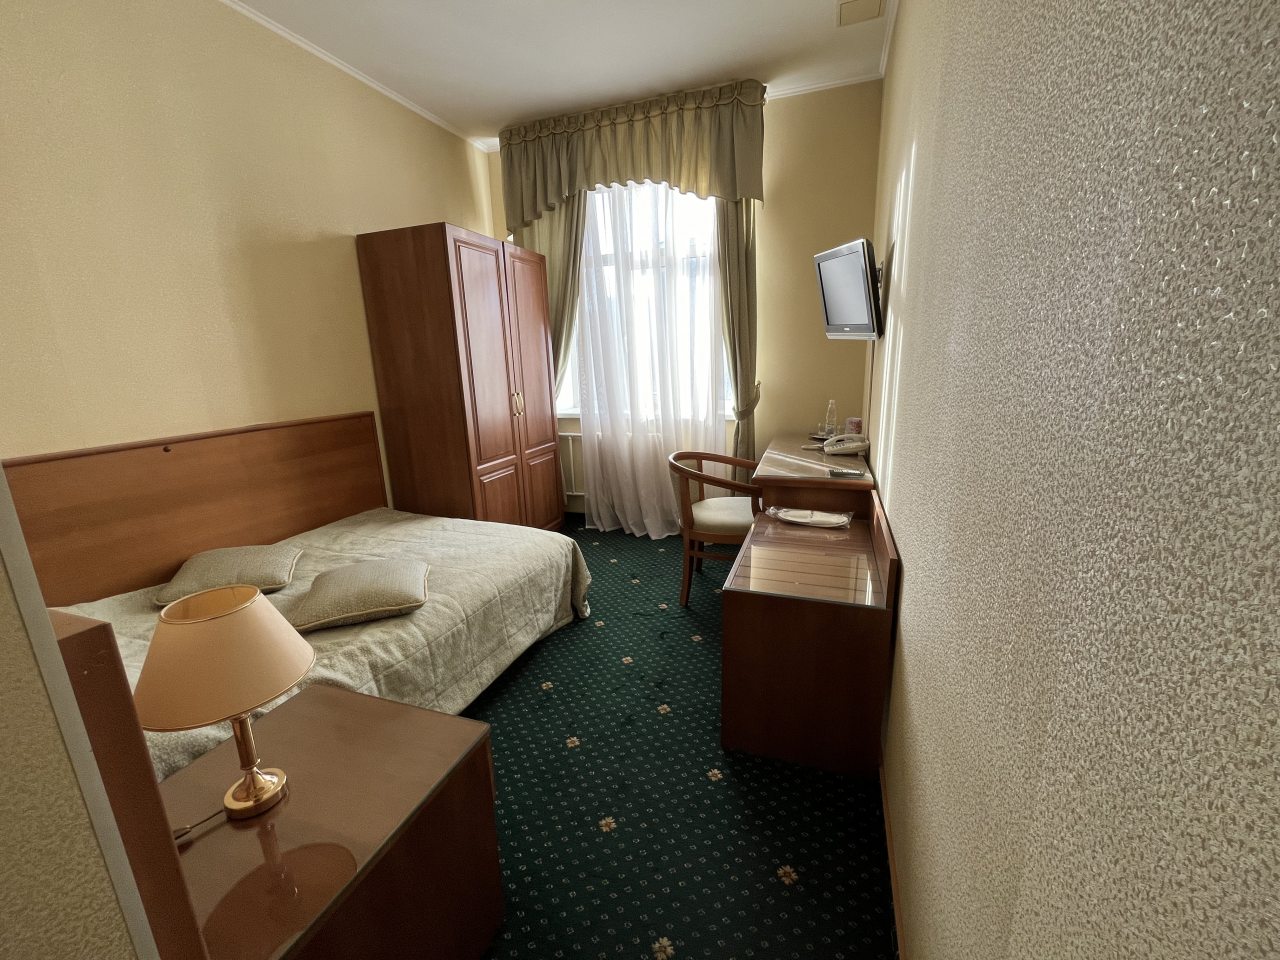 Одноместный (Стандарт) гостиницы TWEED, Оренбург